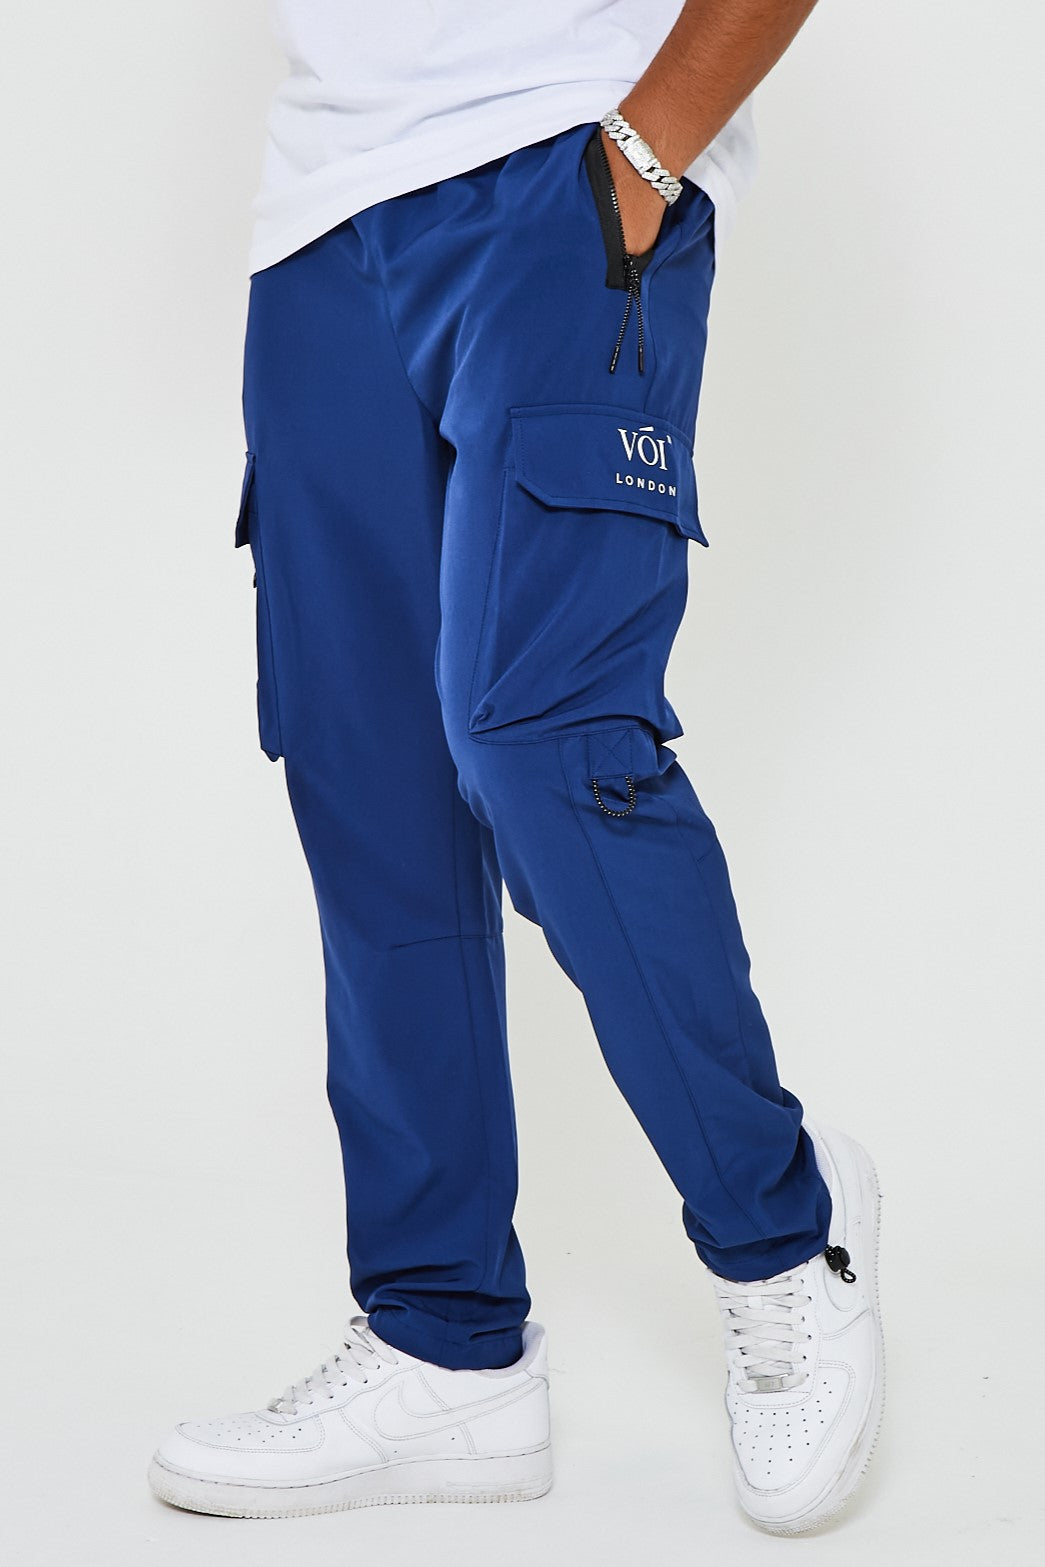 Linton Street Cargo Pants - Dark Blue product